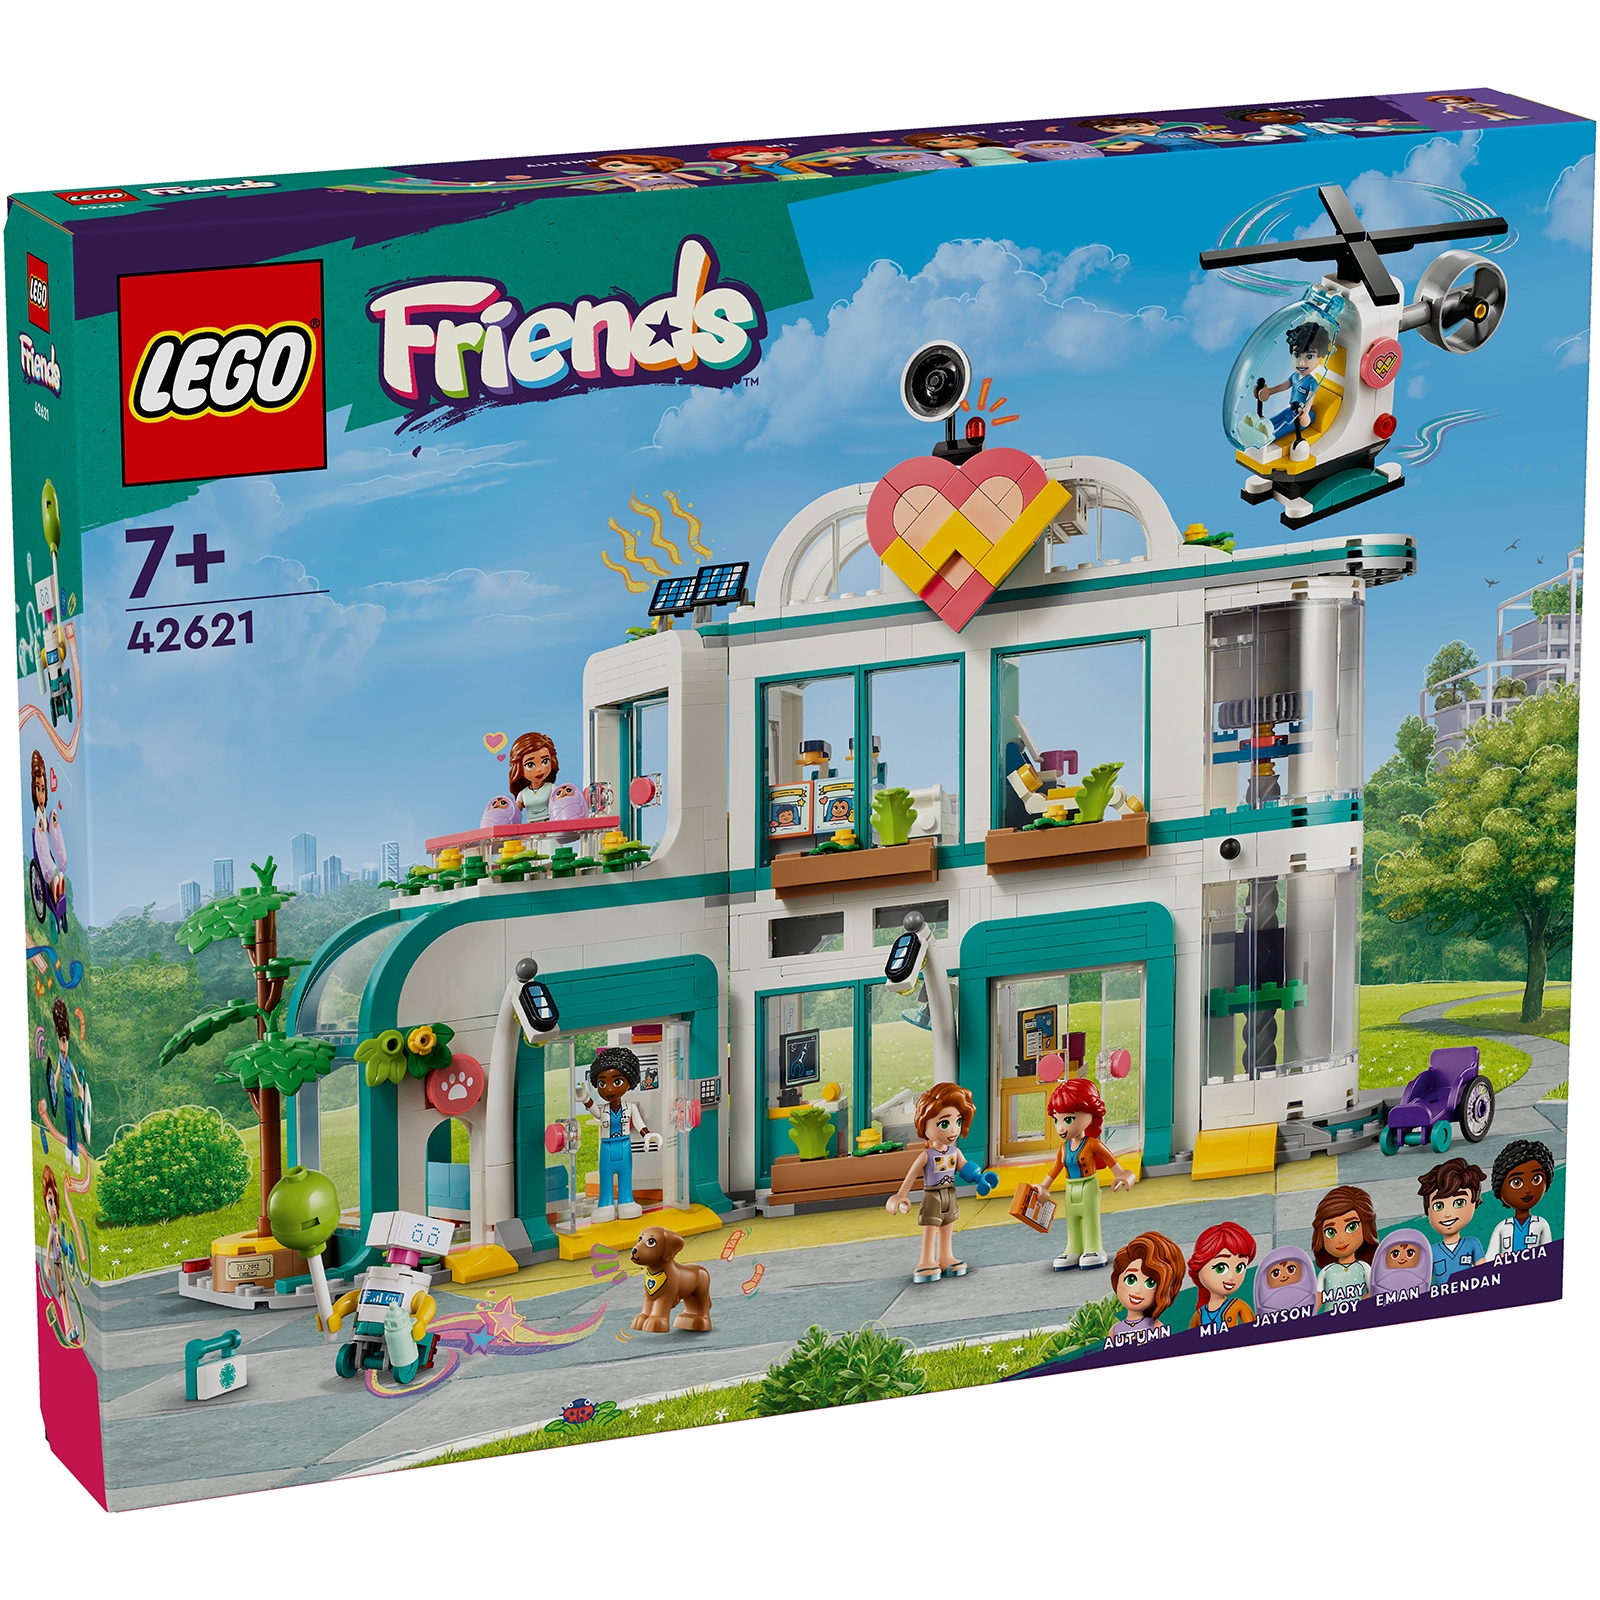 Image of LEGO Friends Heartlake City Hospital Toy Set 42621